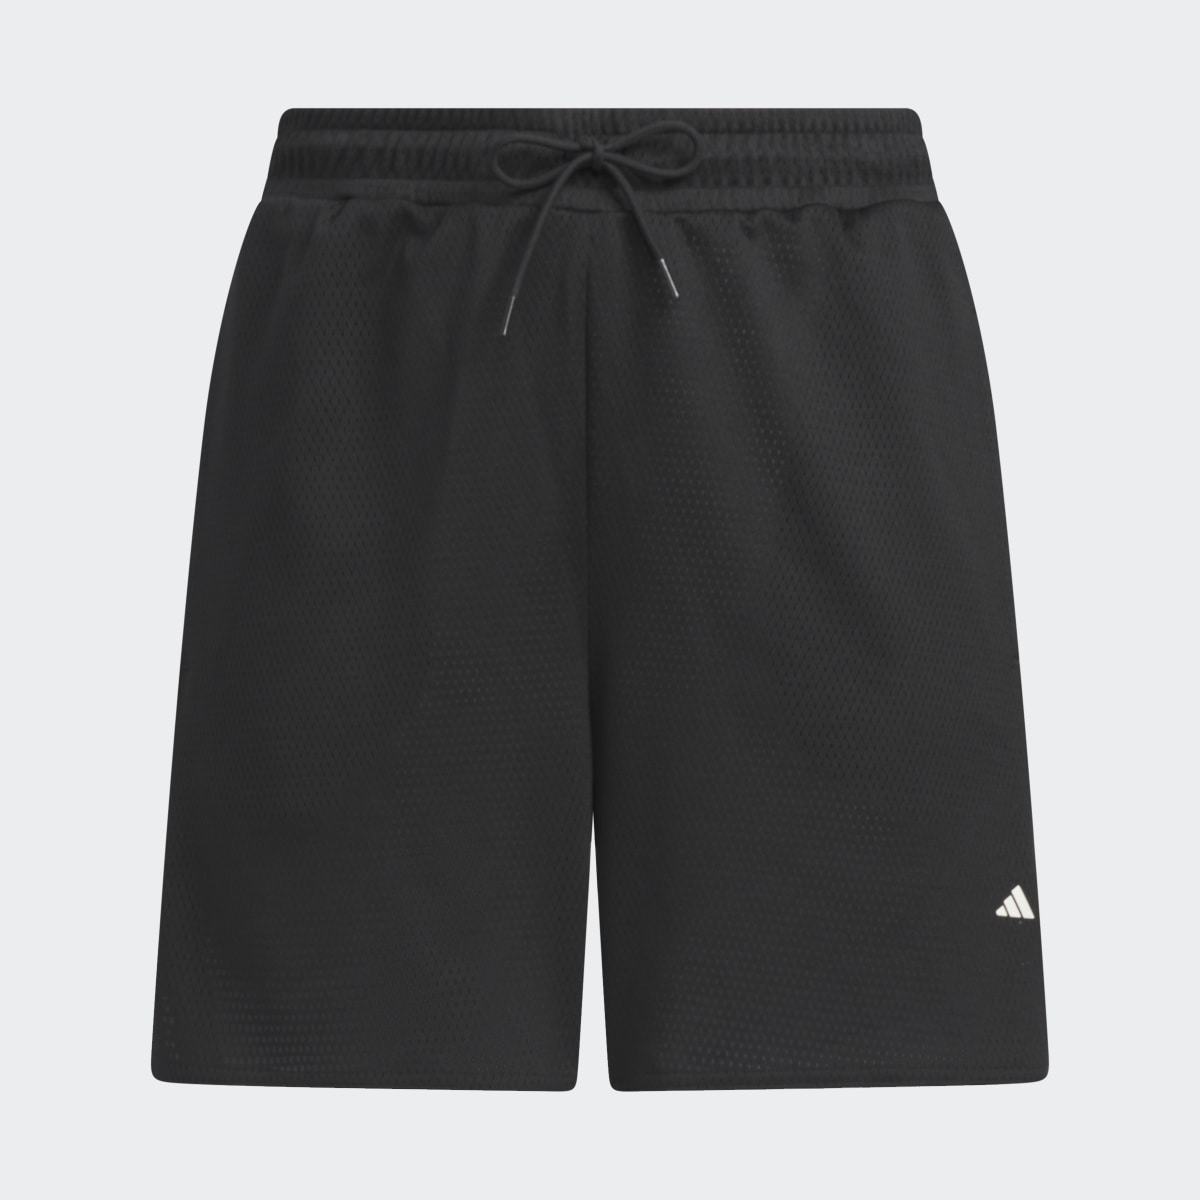 Adidas Select 3-Stripes Basketball Shorts (Plus Size). 4